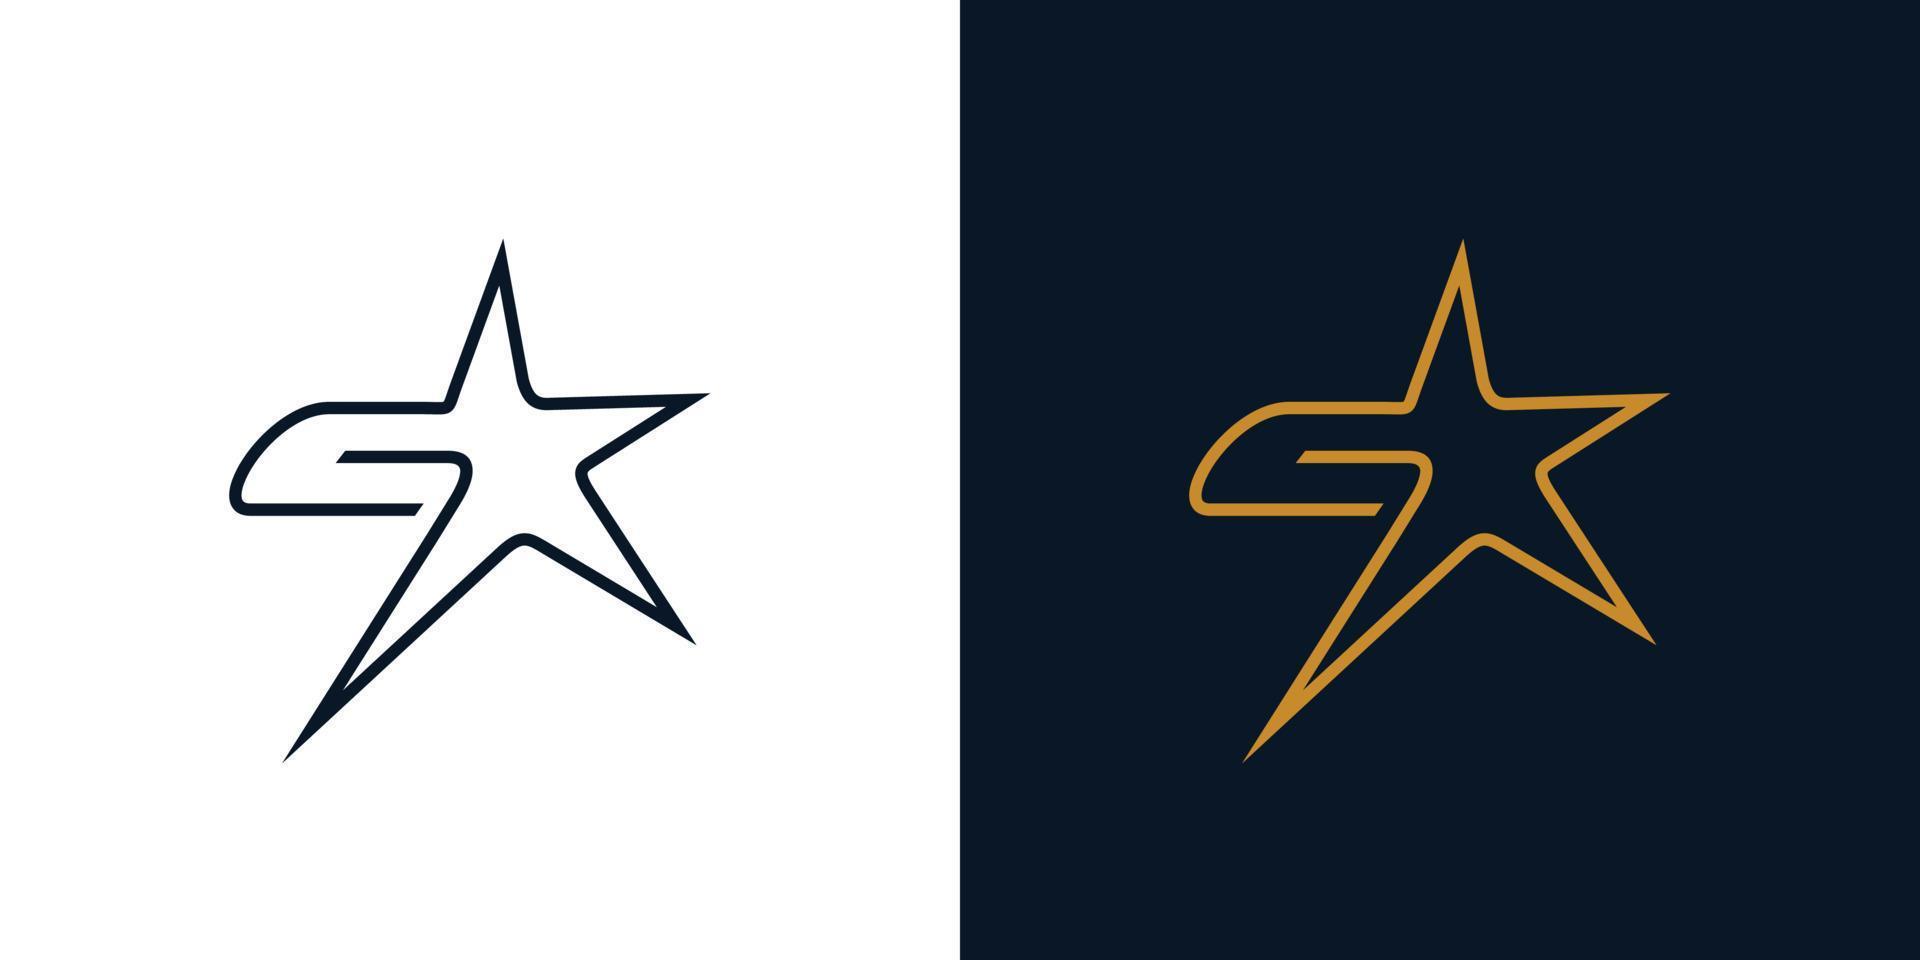 moderno e simples g Estrela logotipo vetor